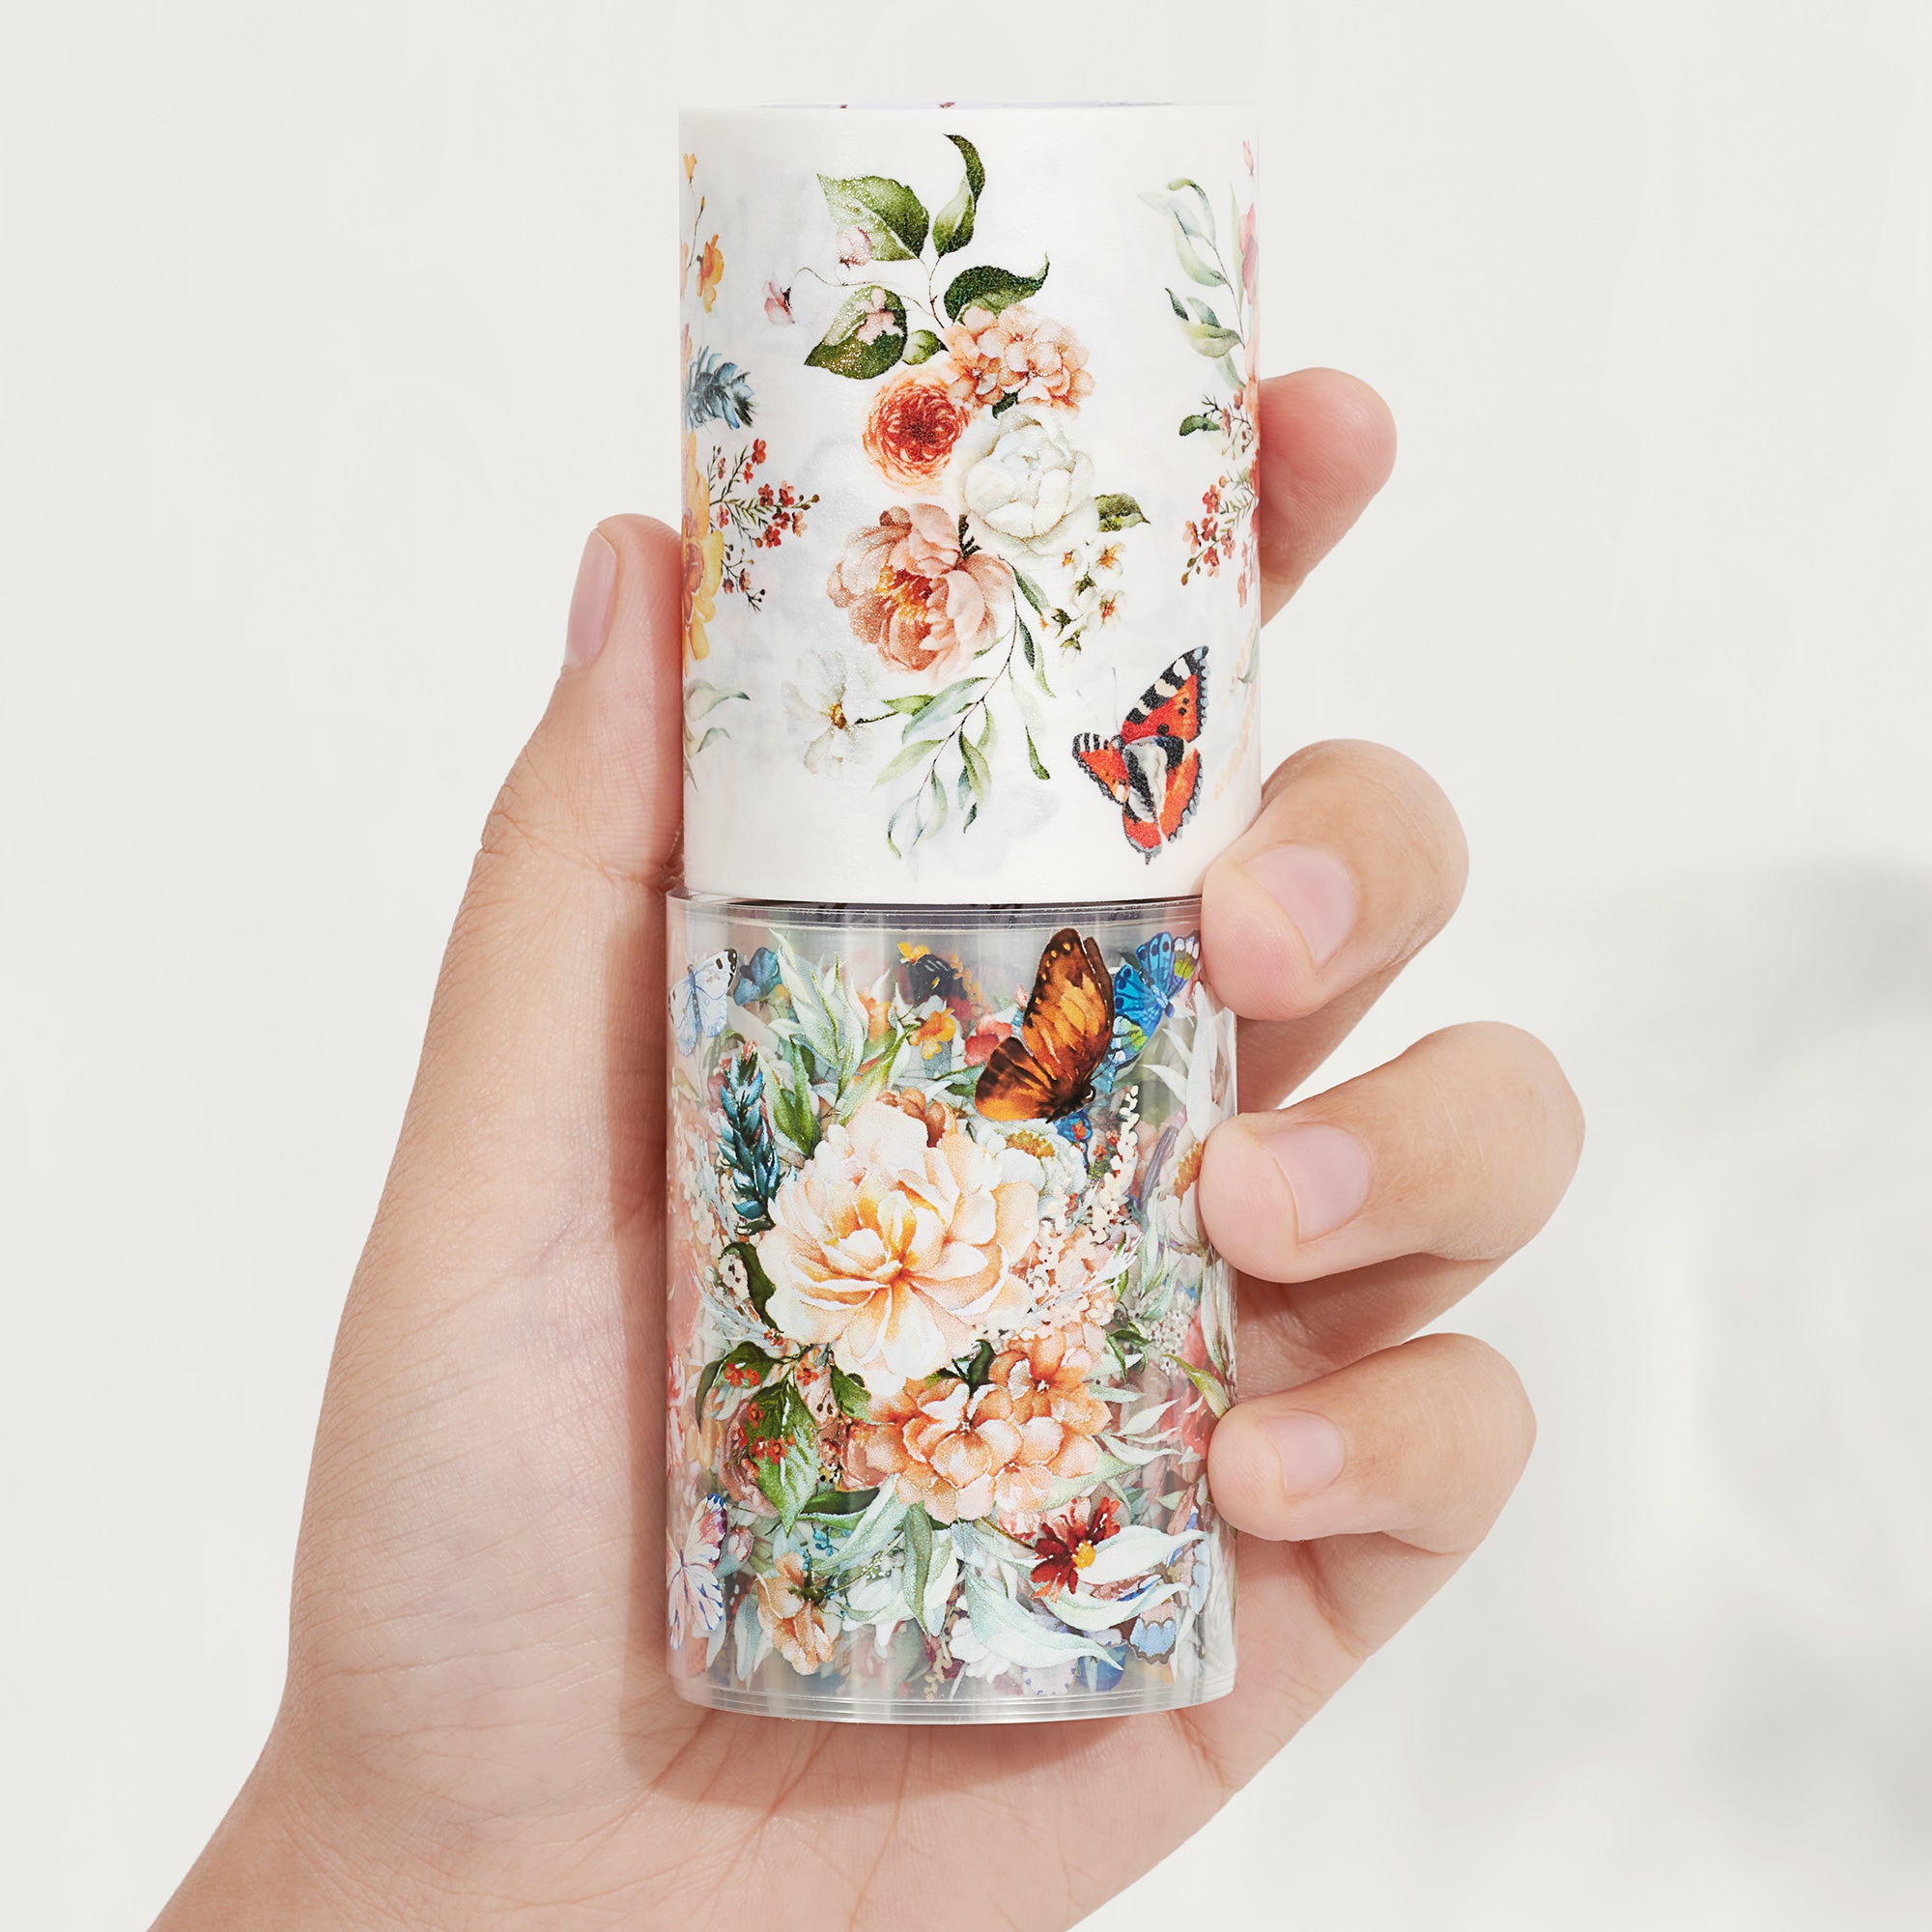 Tape - 50cm Trial-Sized Japanese MT Vintage Floral Washi Tape